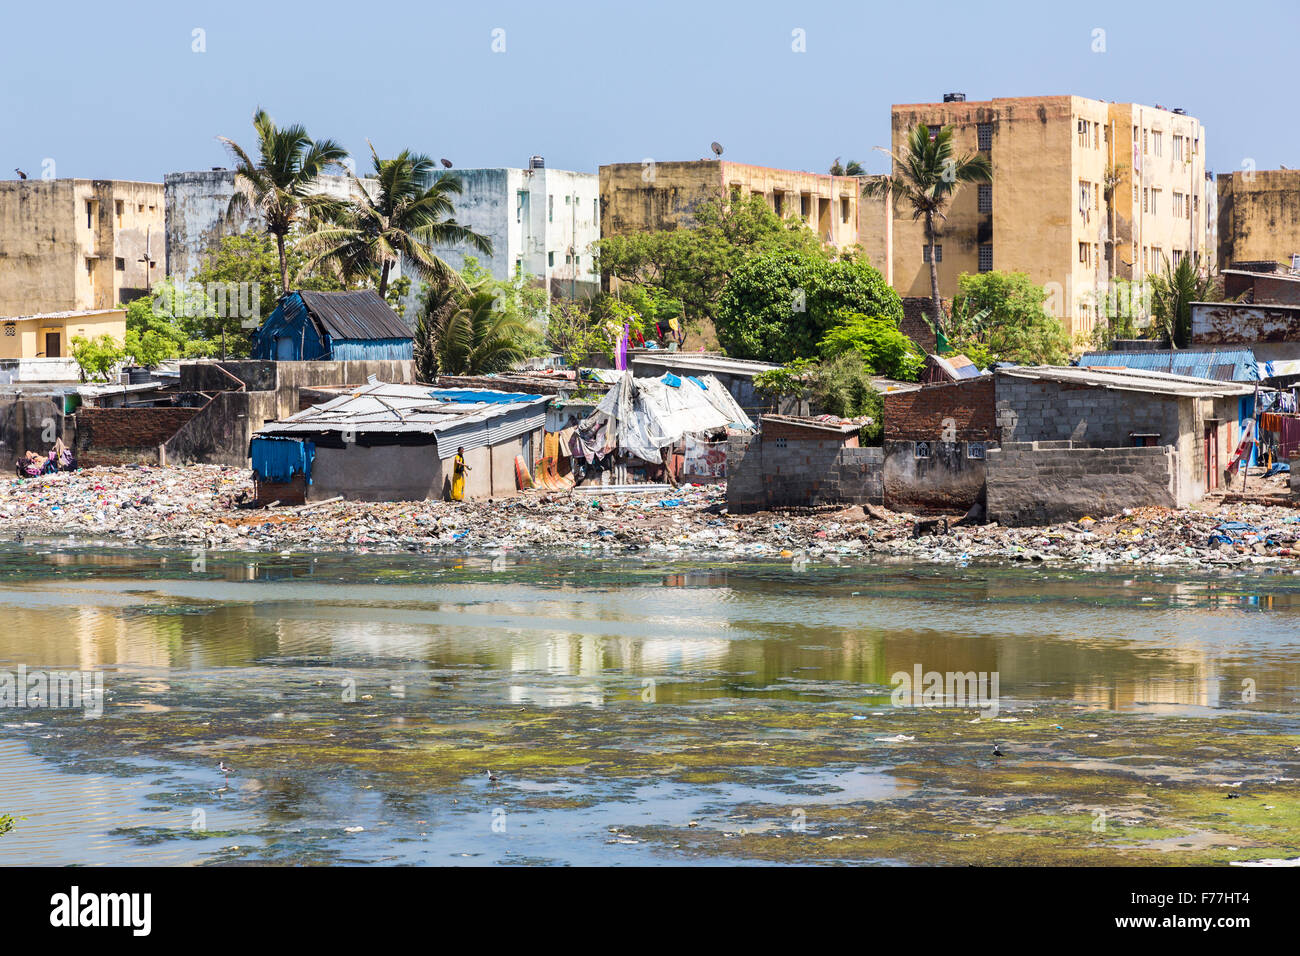 Third world poverty lifestyle: Apartment blocks, riverside shacks, slums on the banks of the polluted Adyar River estuary, Chennai, Tamil Nadu, India Stock Photo